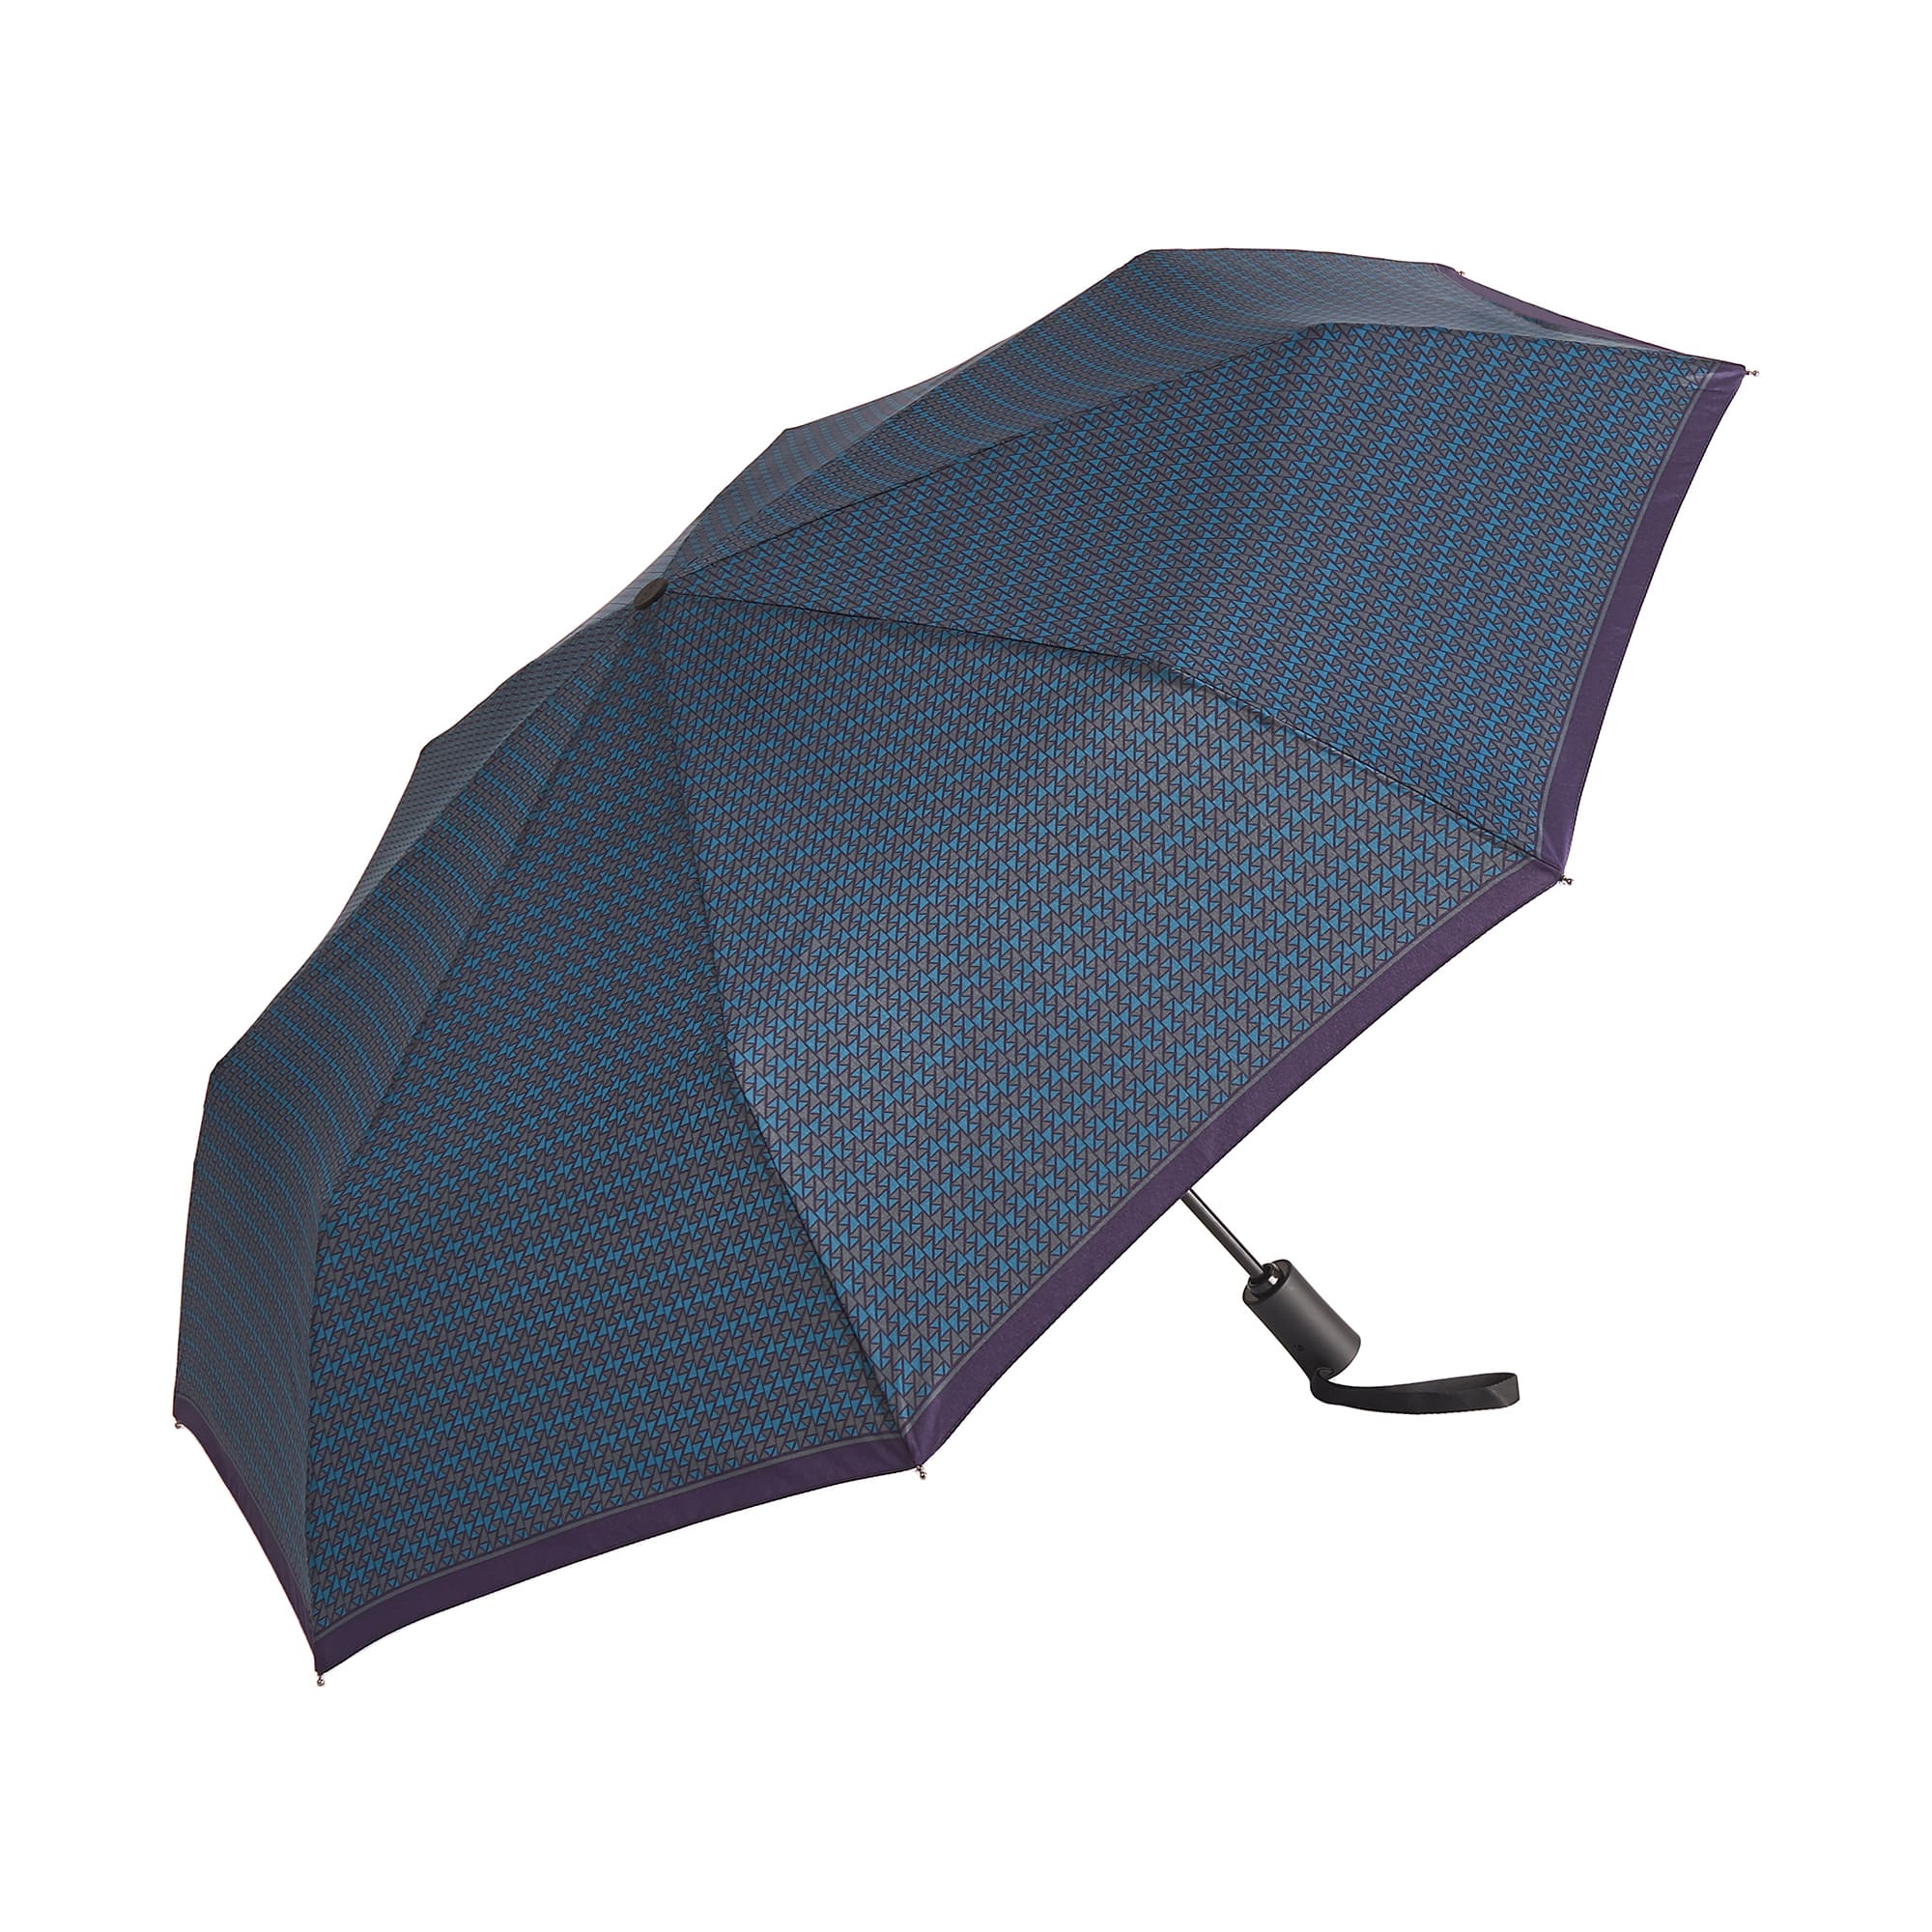 Др.Коффер E417 зонт, цвет синий